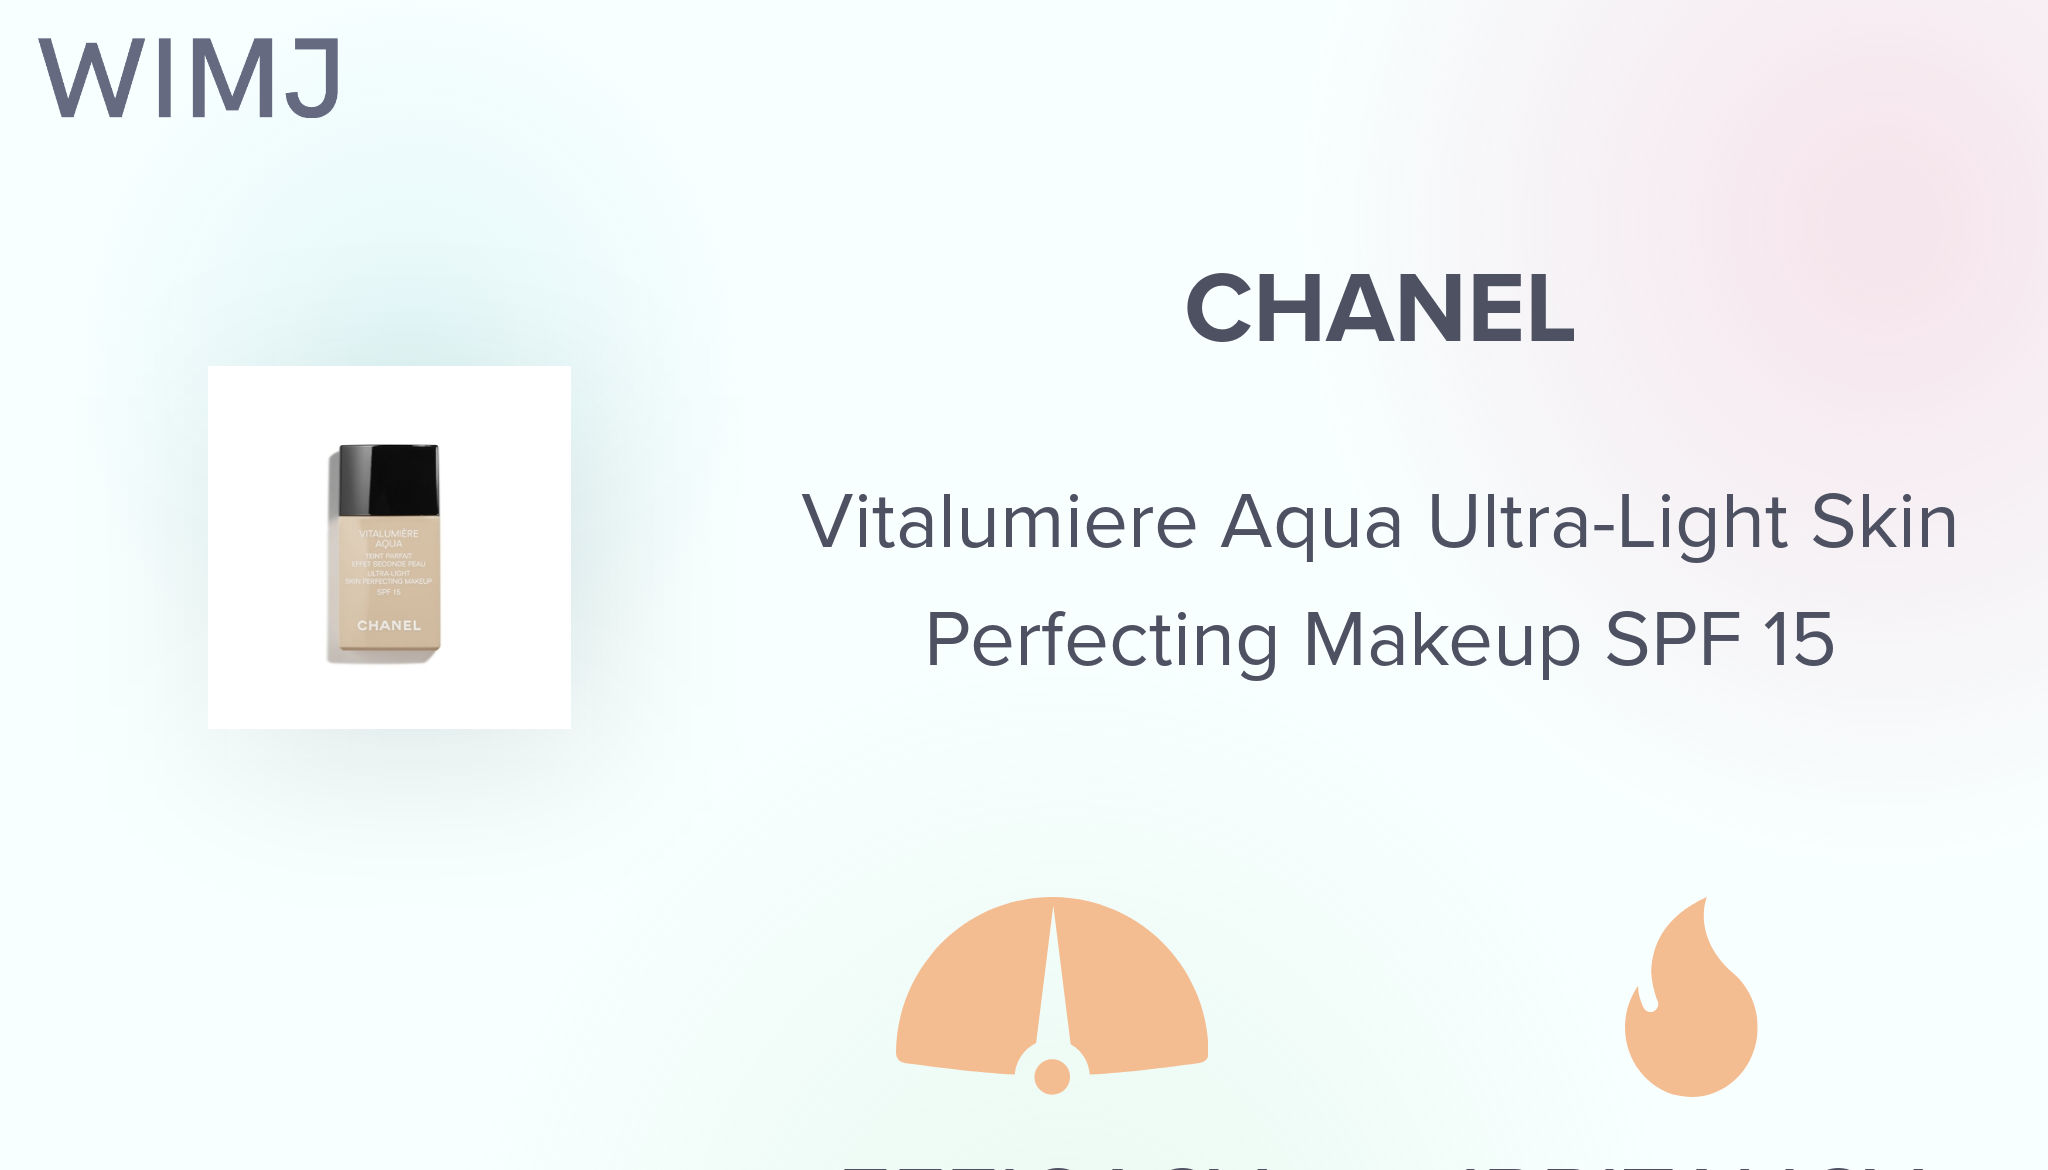 Review: CHANEL - Vitalumiere Aqua Ultra-Light Skin Perfecting Makeup SPF 15  - WIMJ